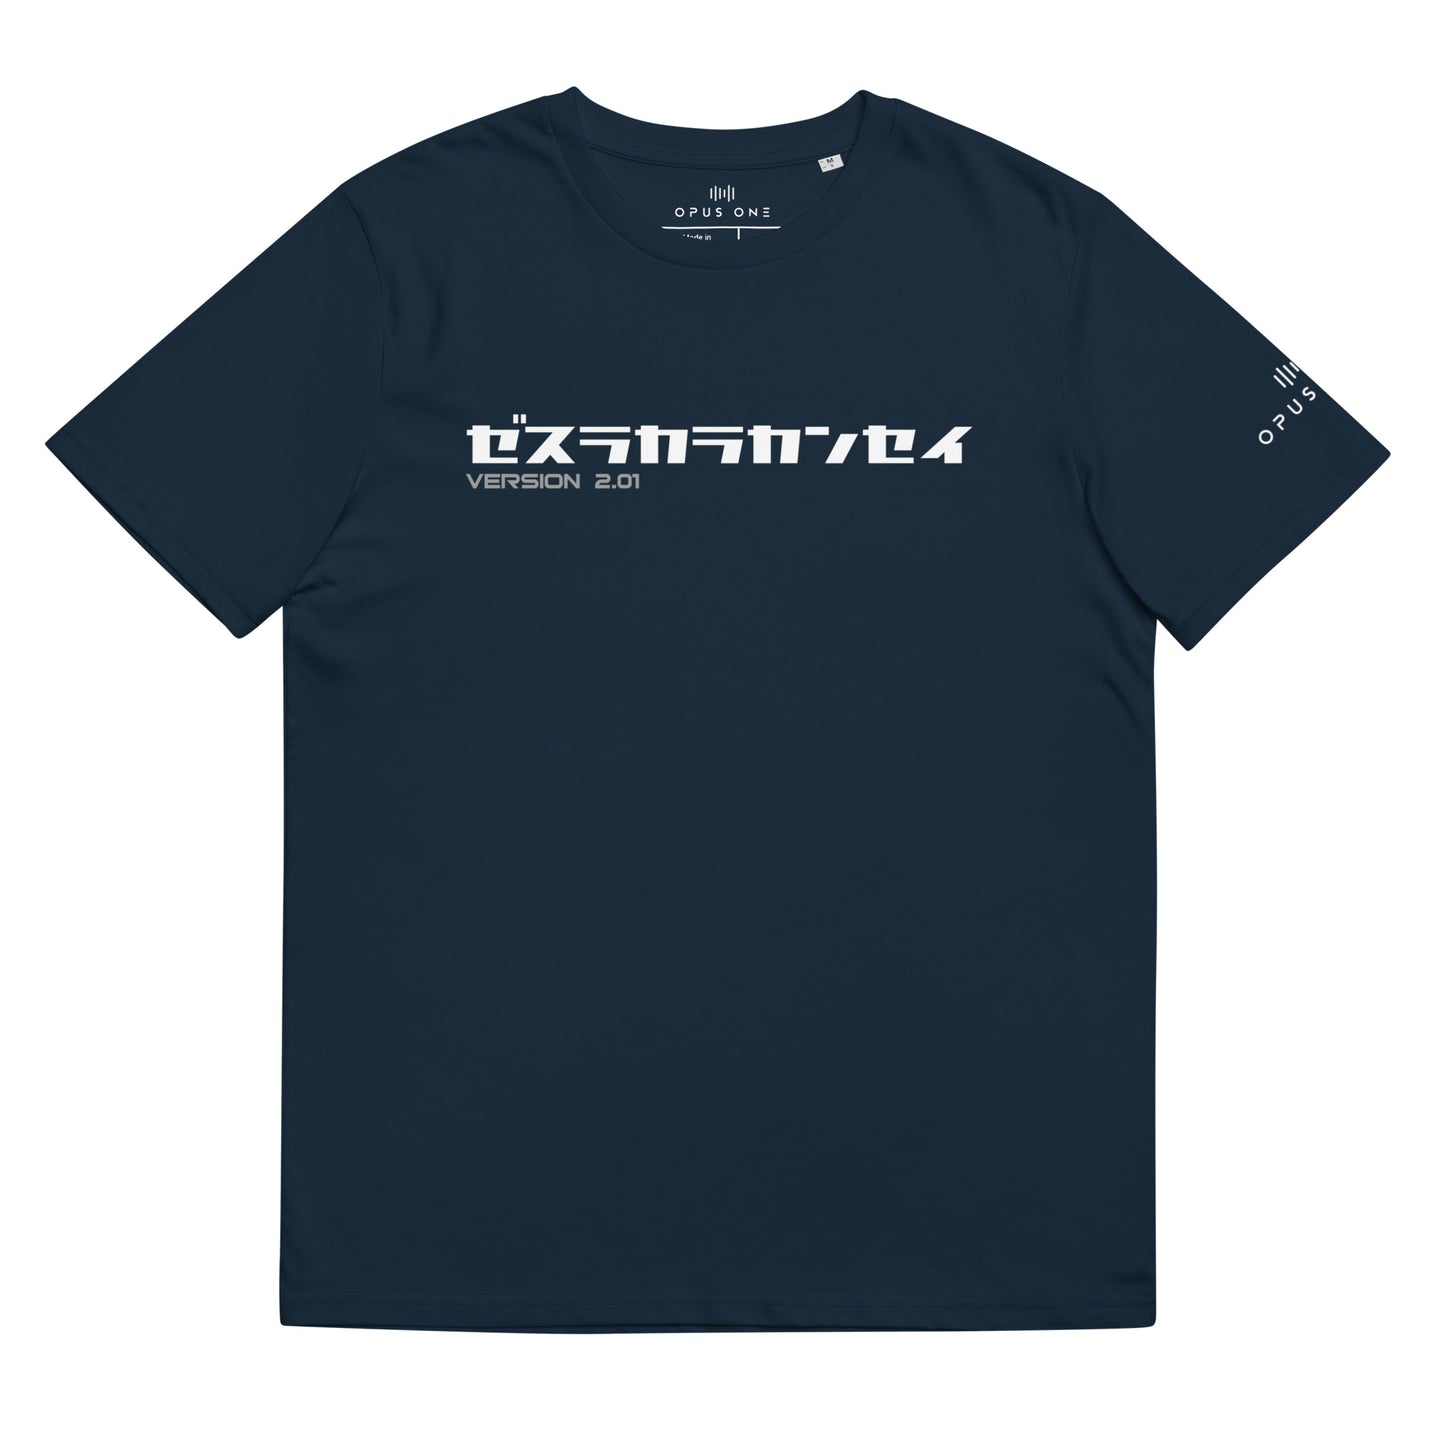 Prototype (v1) Unisex organic cotton t-shirt (White Text)